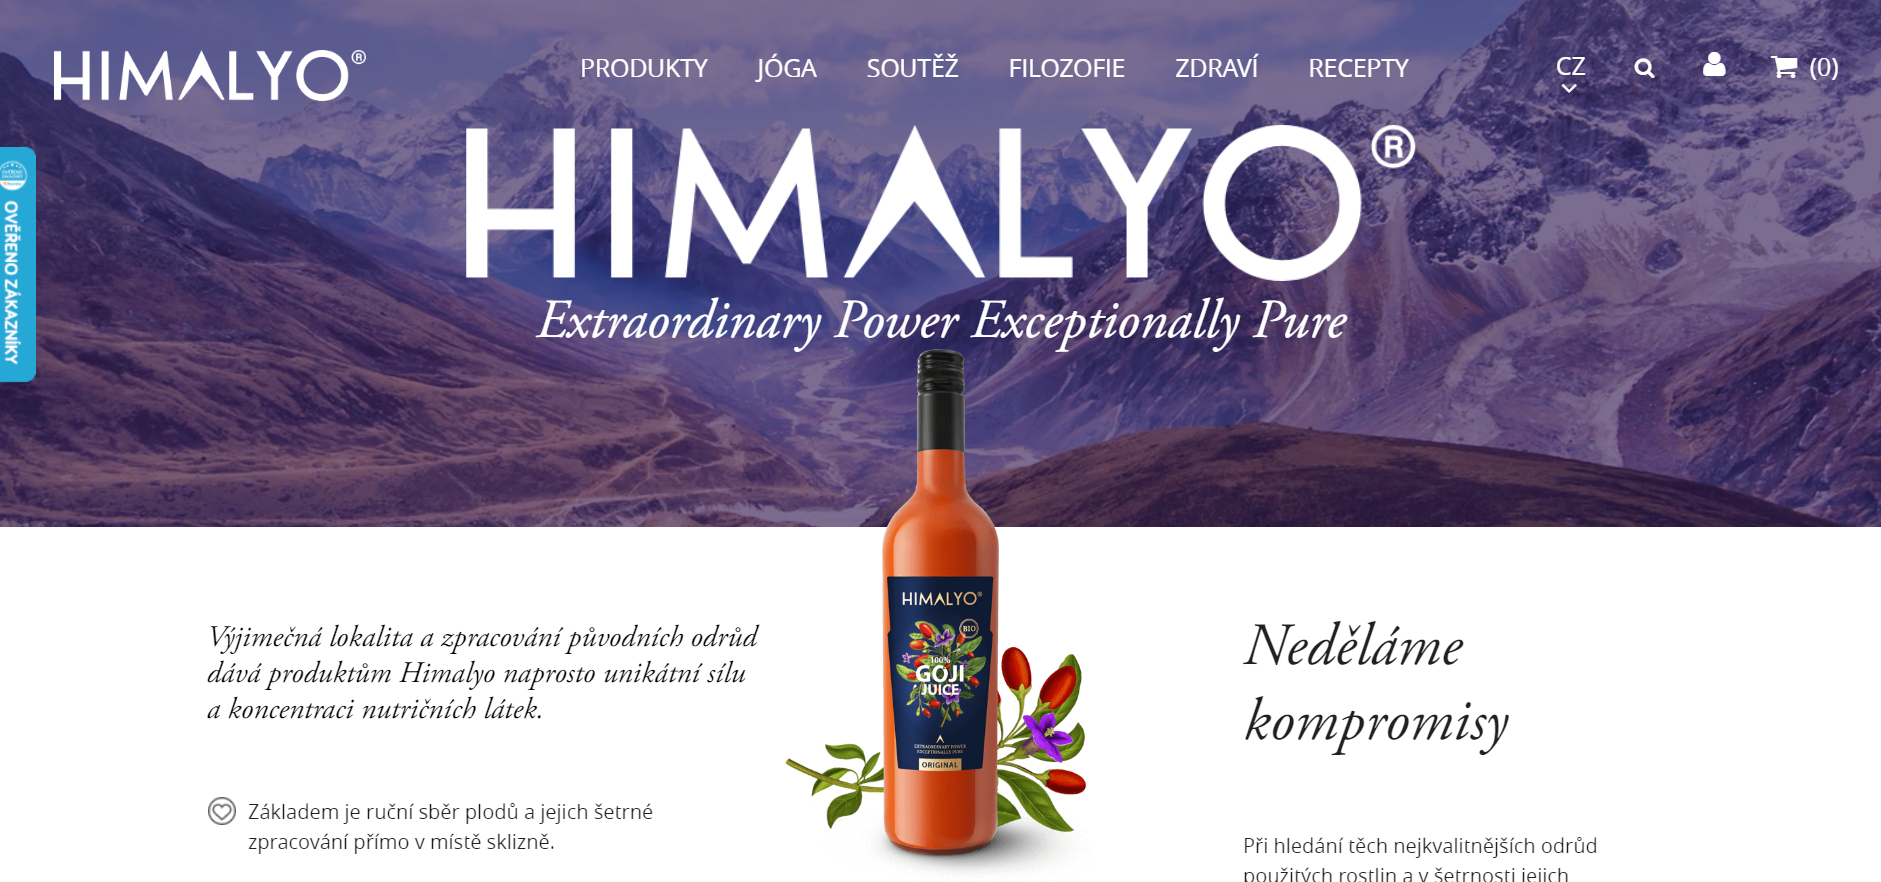 Himalyo homepage